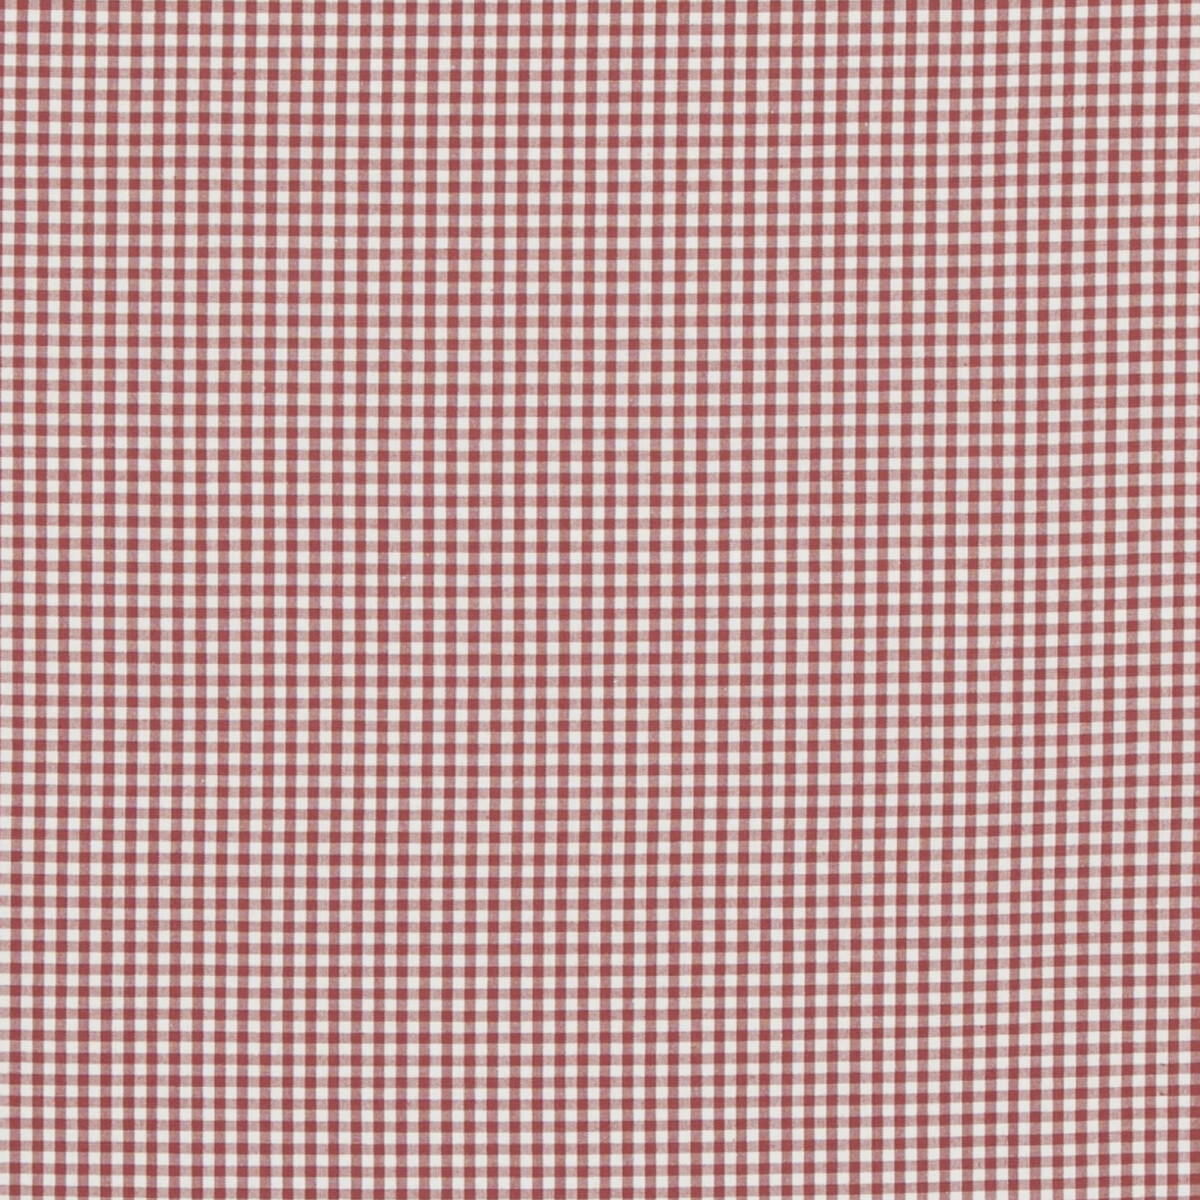 Baker Lifestyle Pf50506.450.0 Sherborne Gingham Multipurpose Fabric in Red